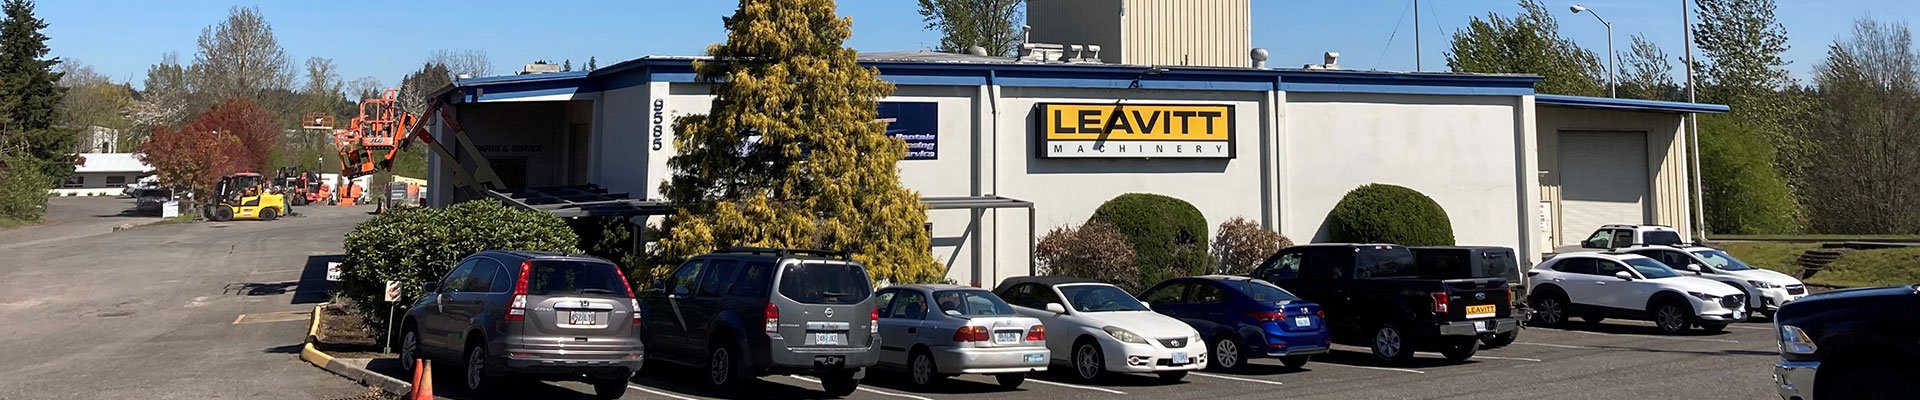 Leavitt Machinery Portland branch